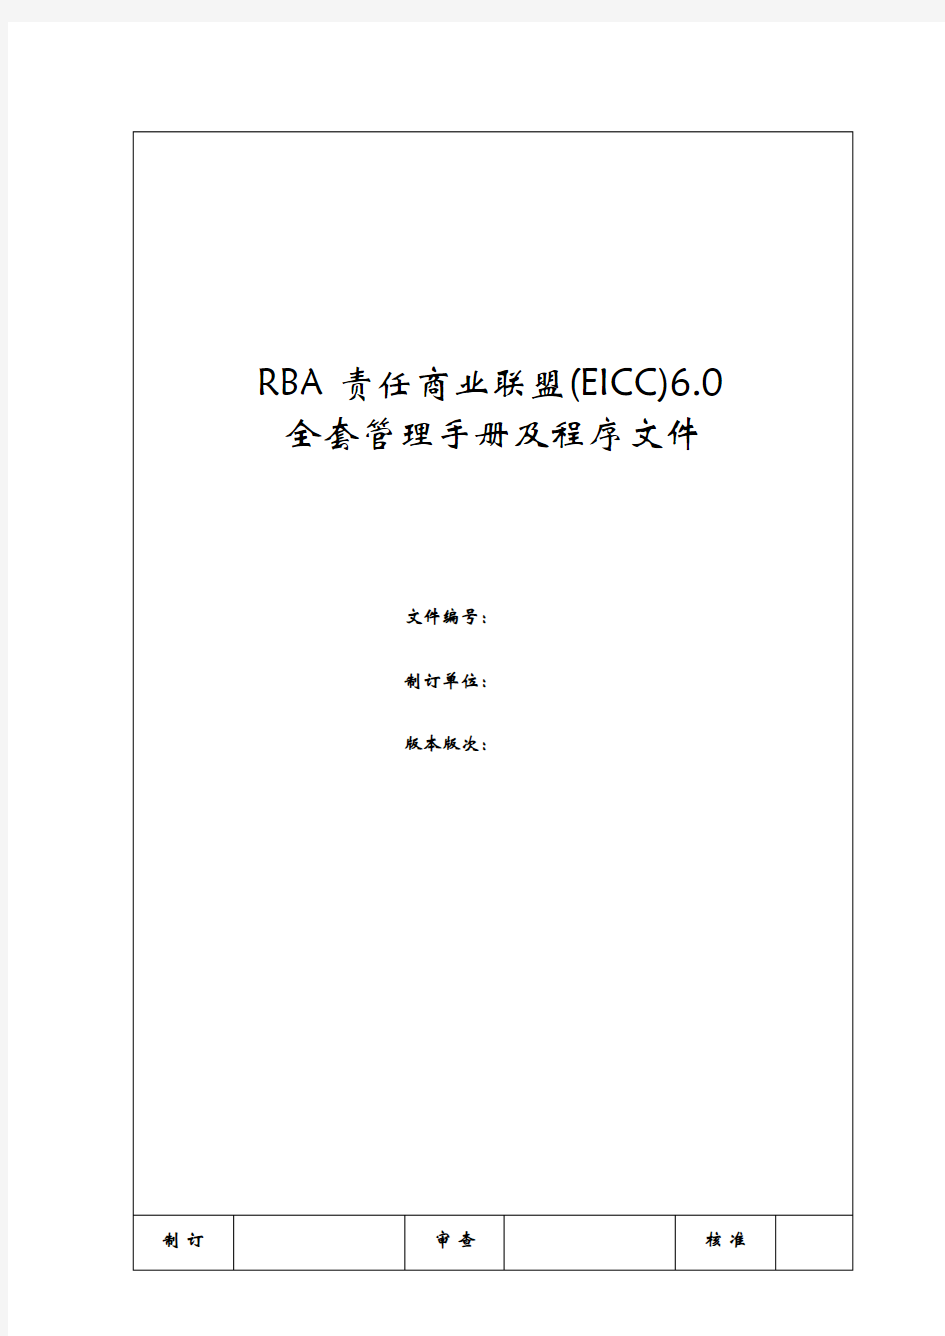 RBA6.0(EICC)全套管理手册及程序文件